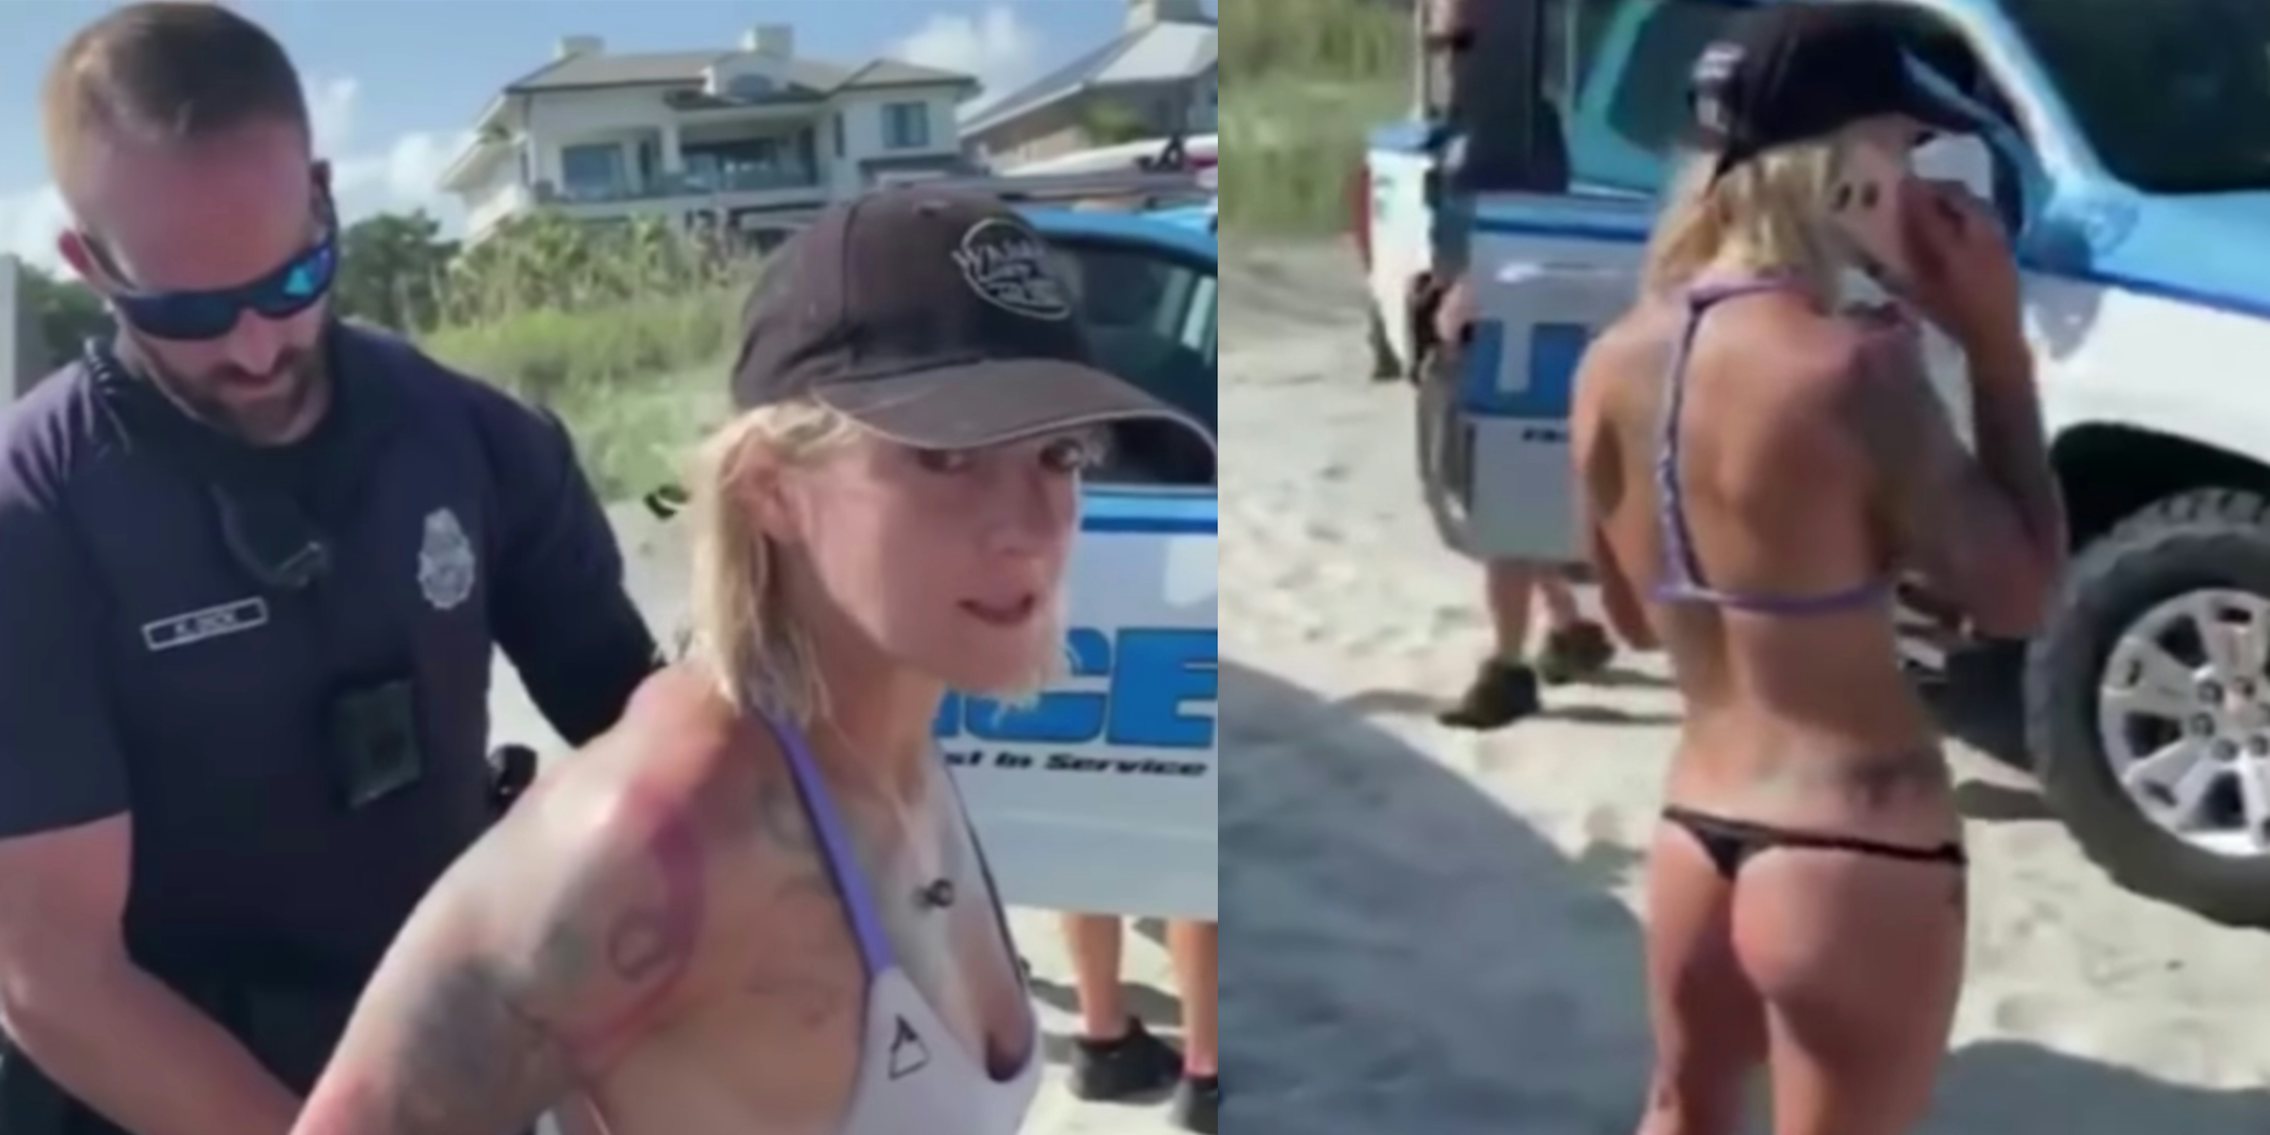 police detain woman for wearing thong bikini on beach